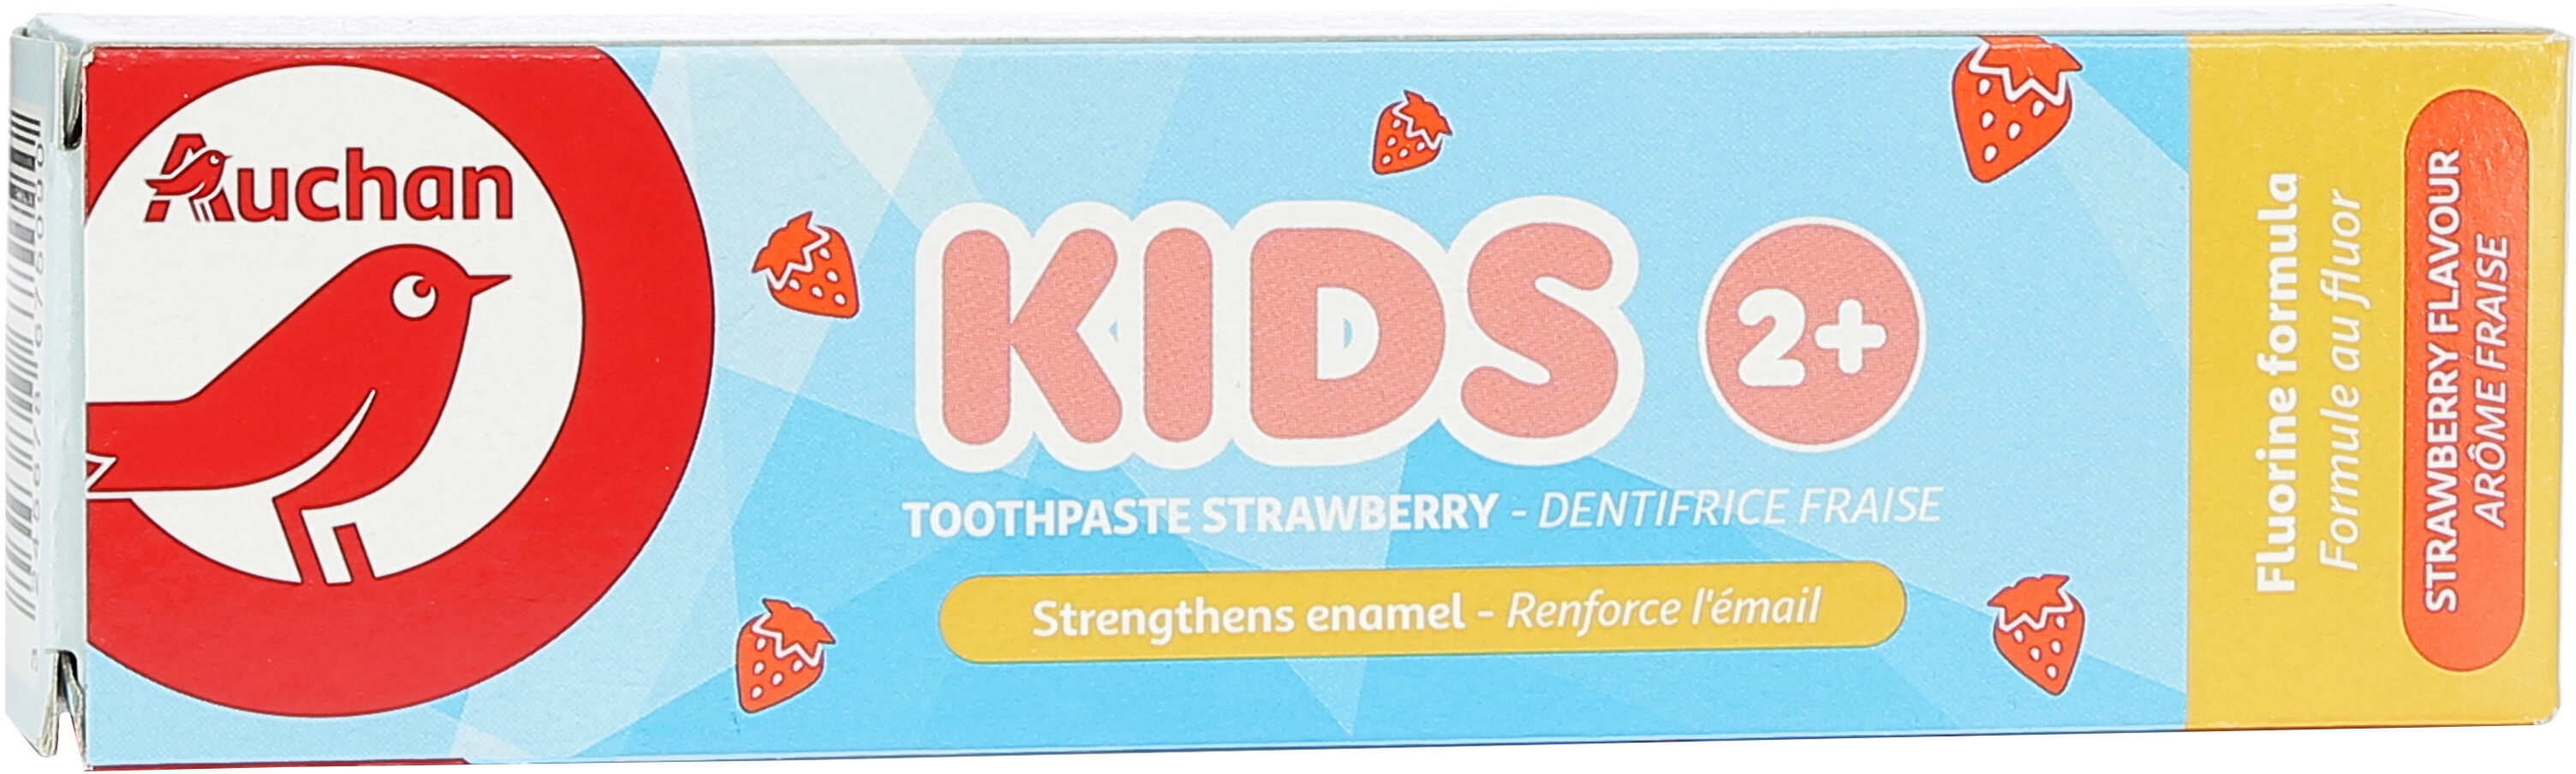 Auchan kids dentifrice - fraise - enfants 2 + - 50ml - 製品 - fr